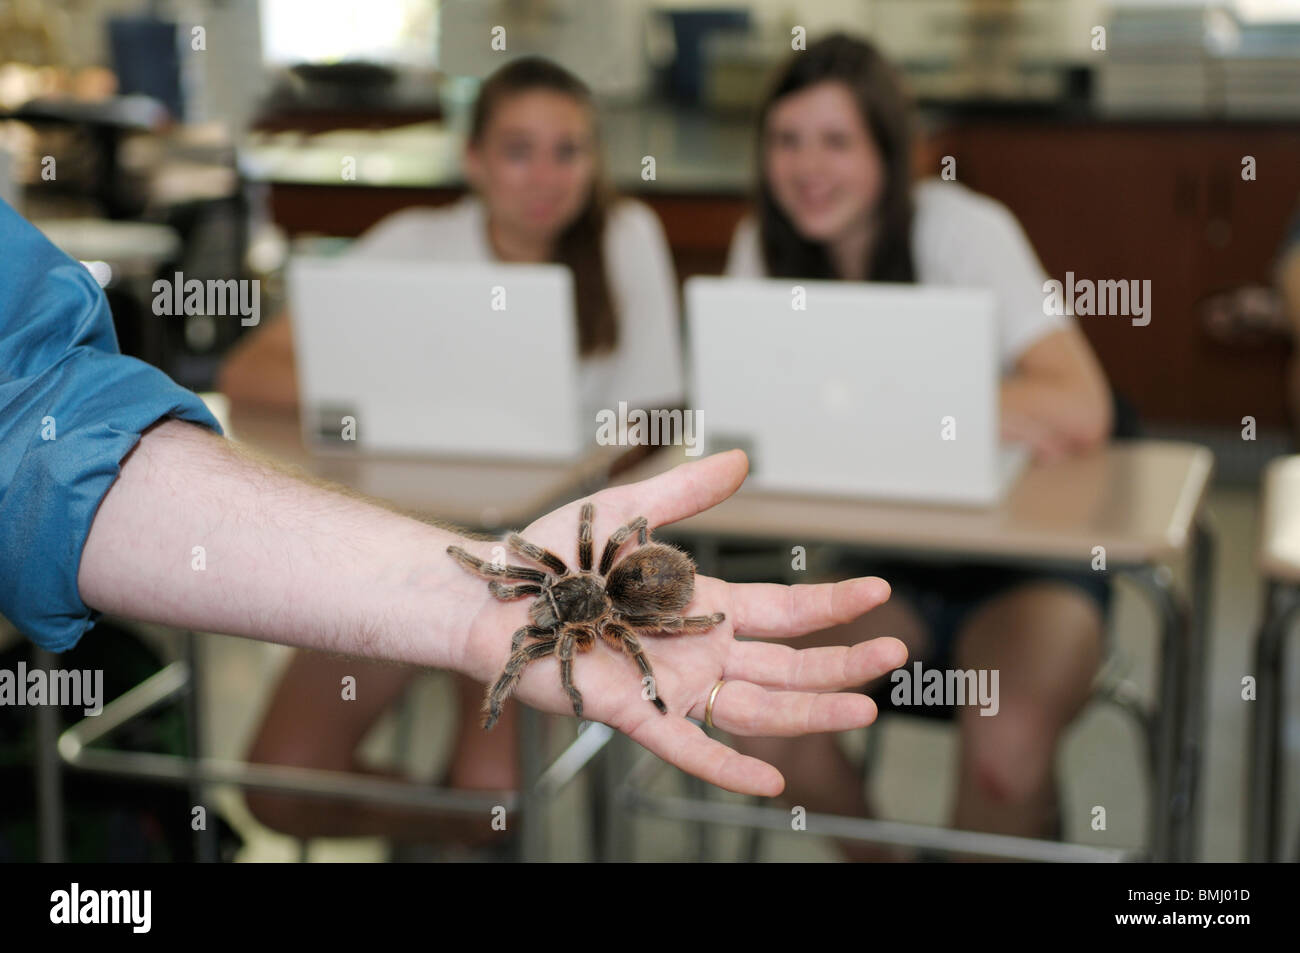 Teacher holding tarantula with students looking on Stock Photo